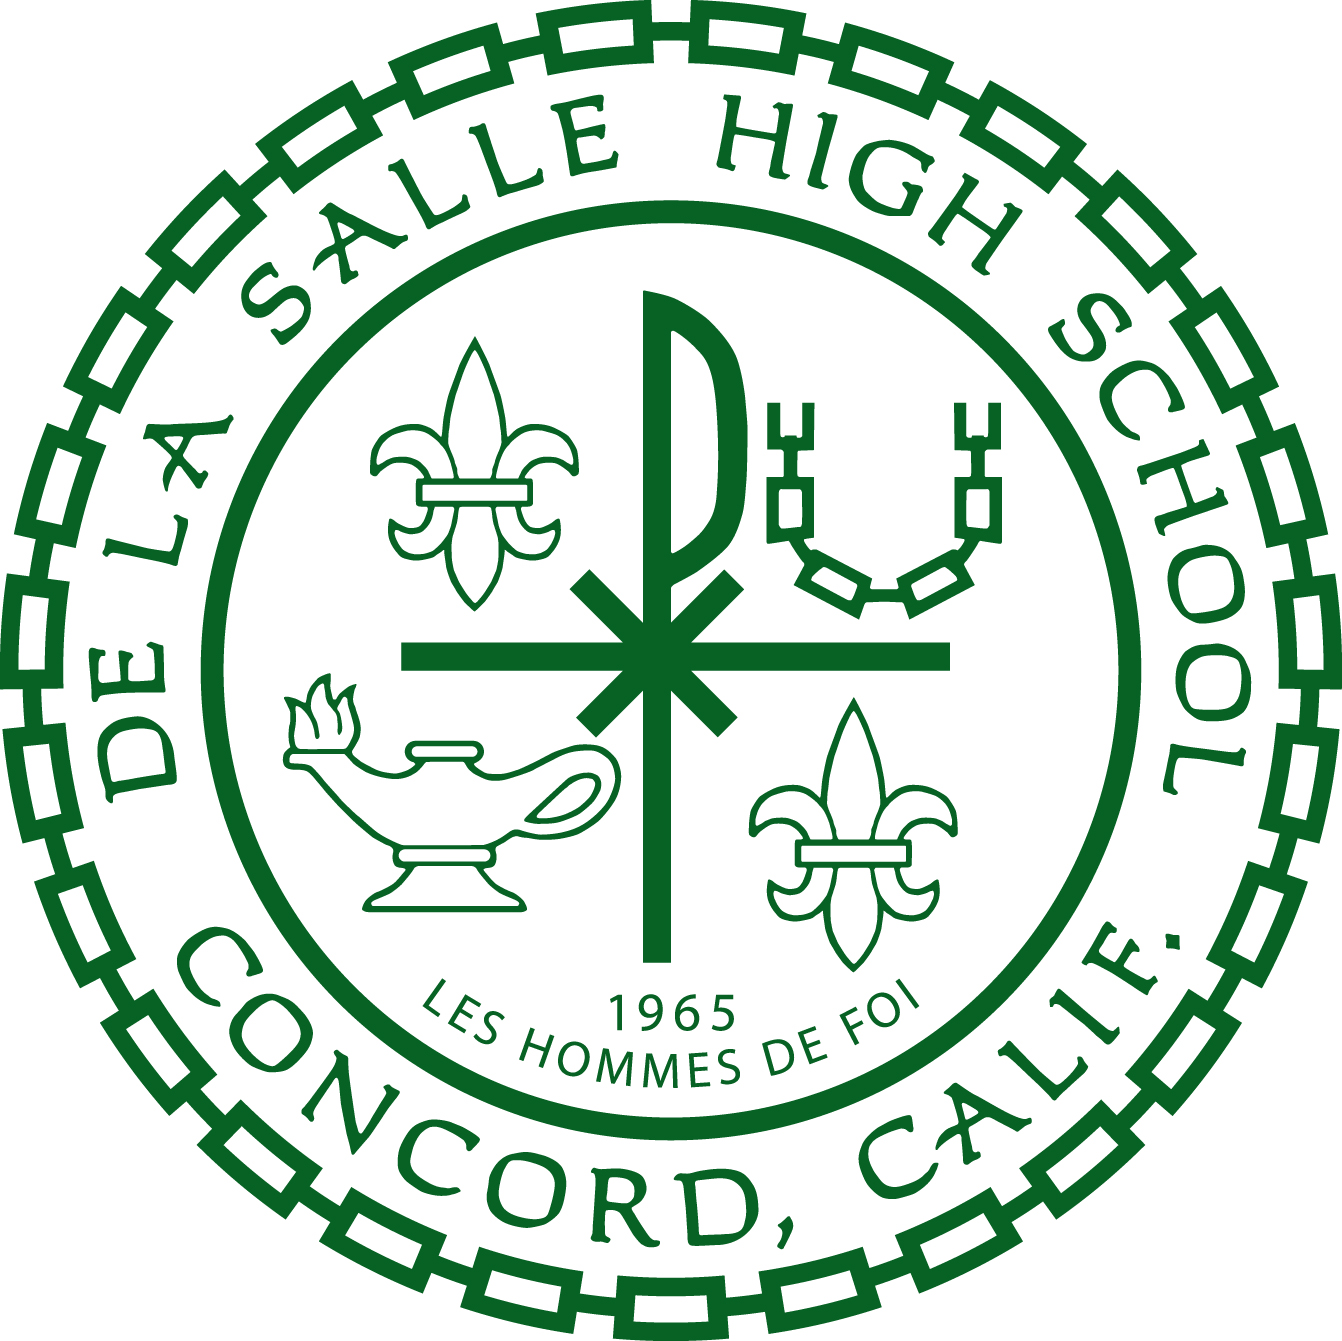 Concords De La Salle High School Football Team Wins 6th State Bowl